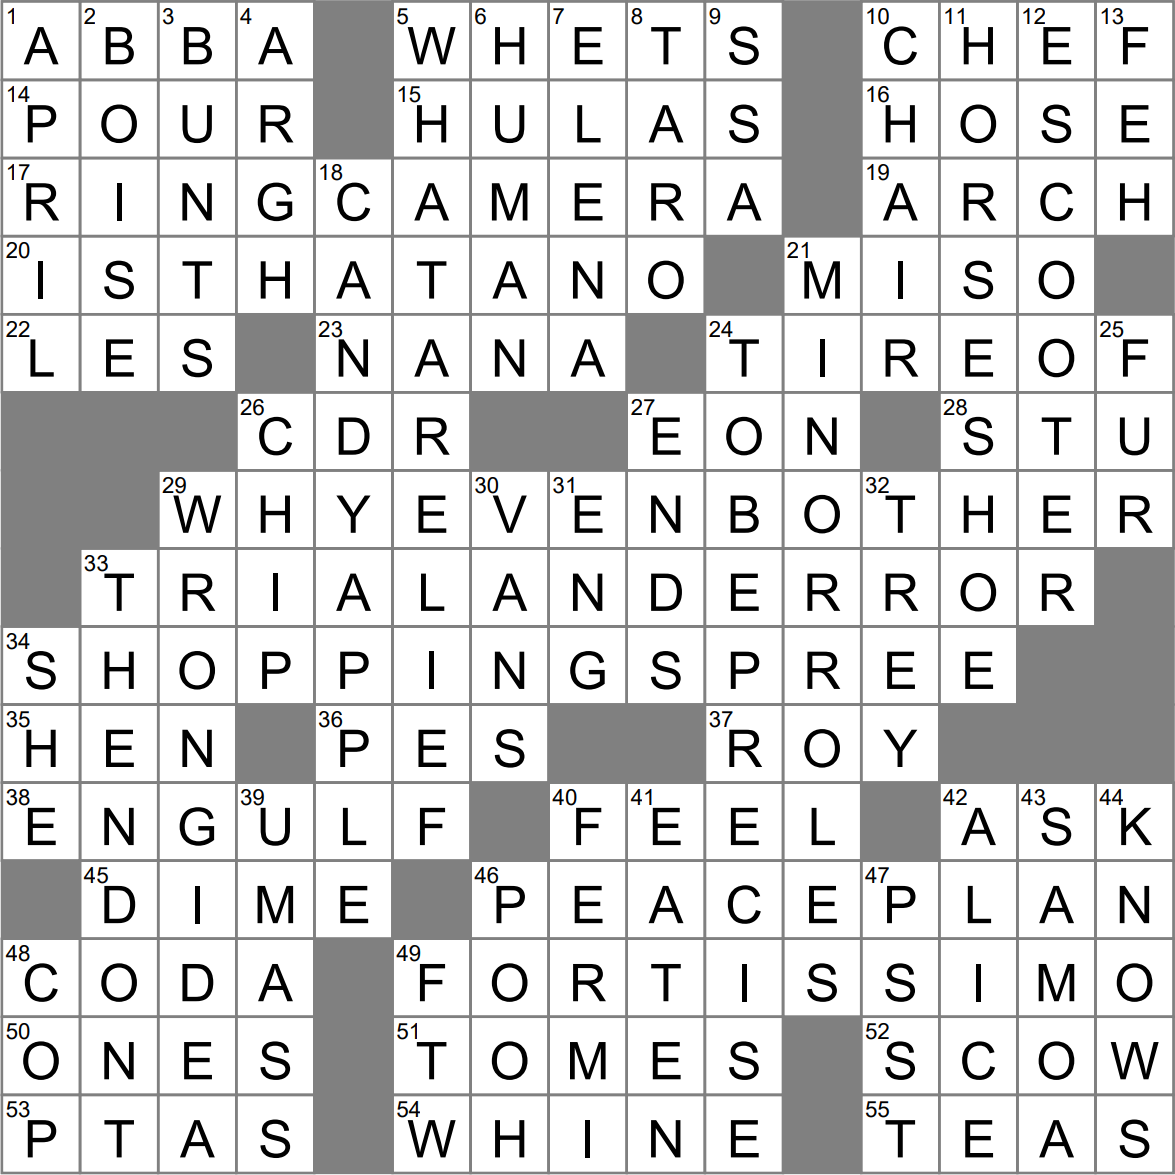 LA Times Crossword 17 Jun 23 Saturday LAXCrossword com